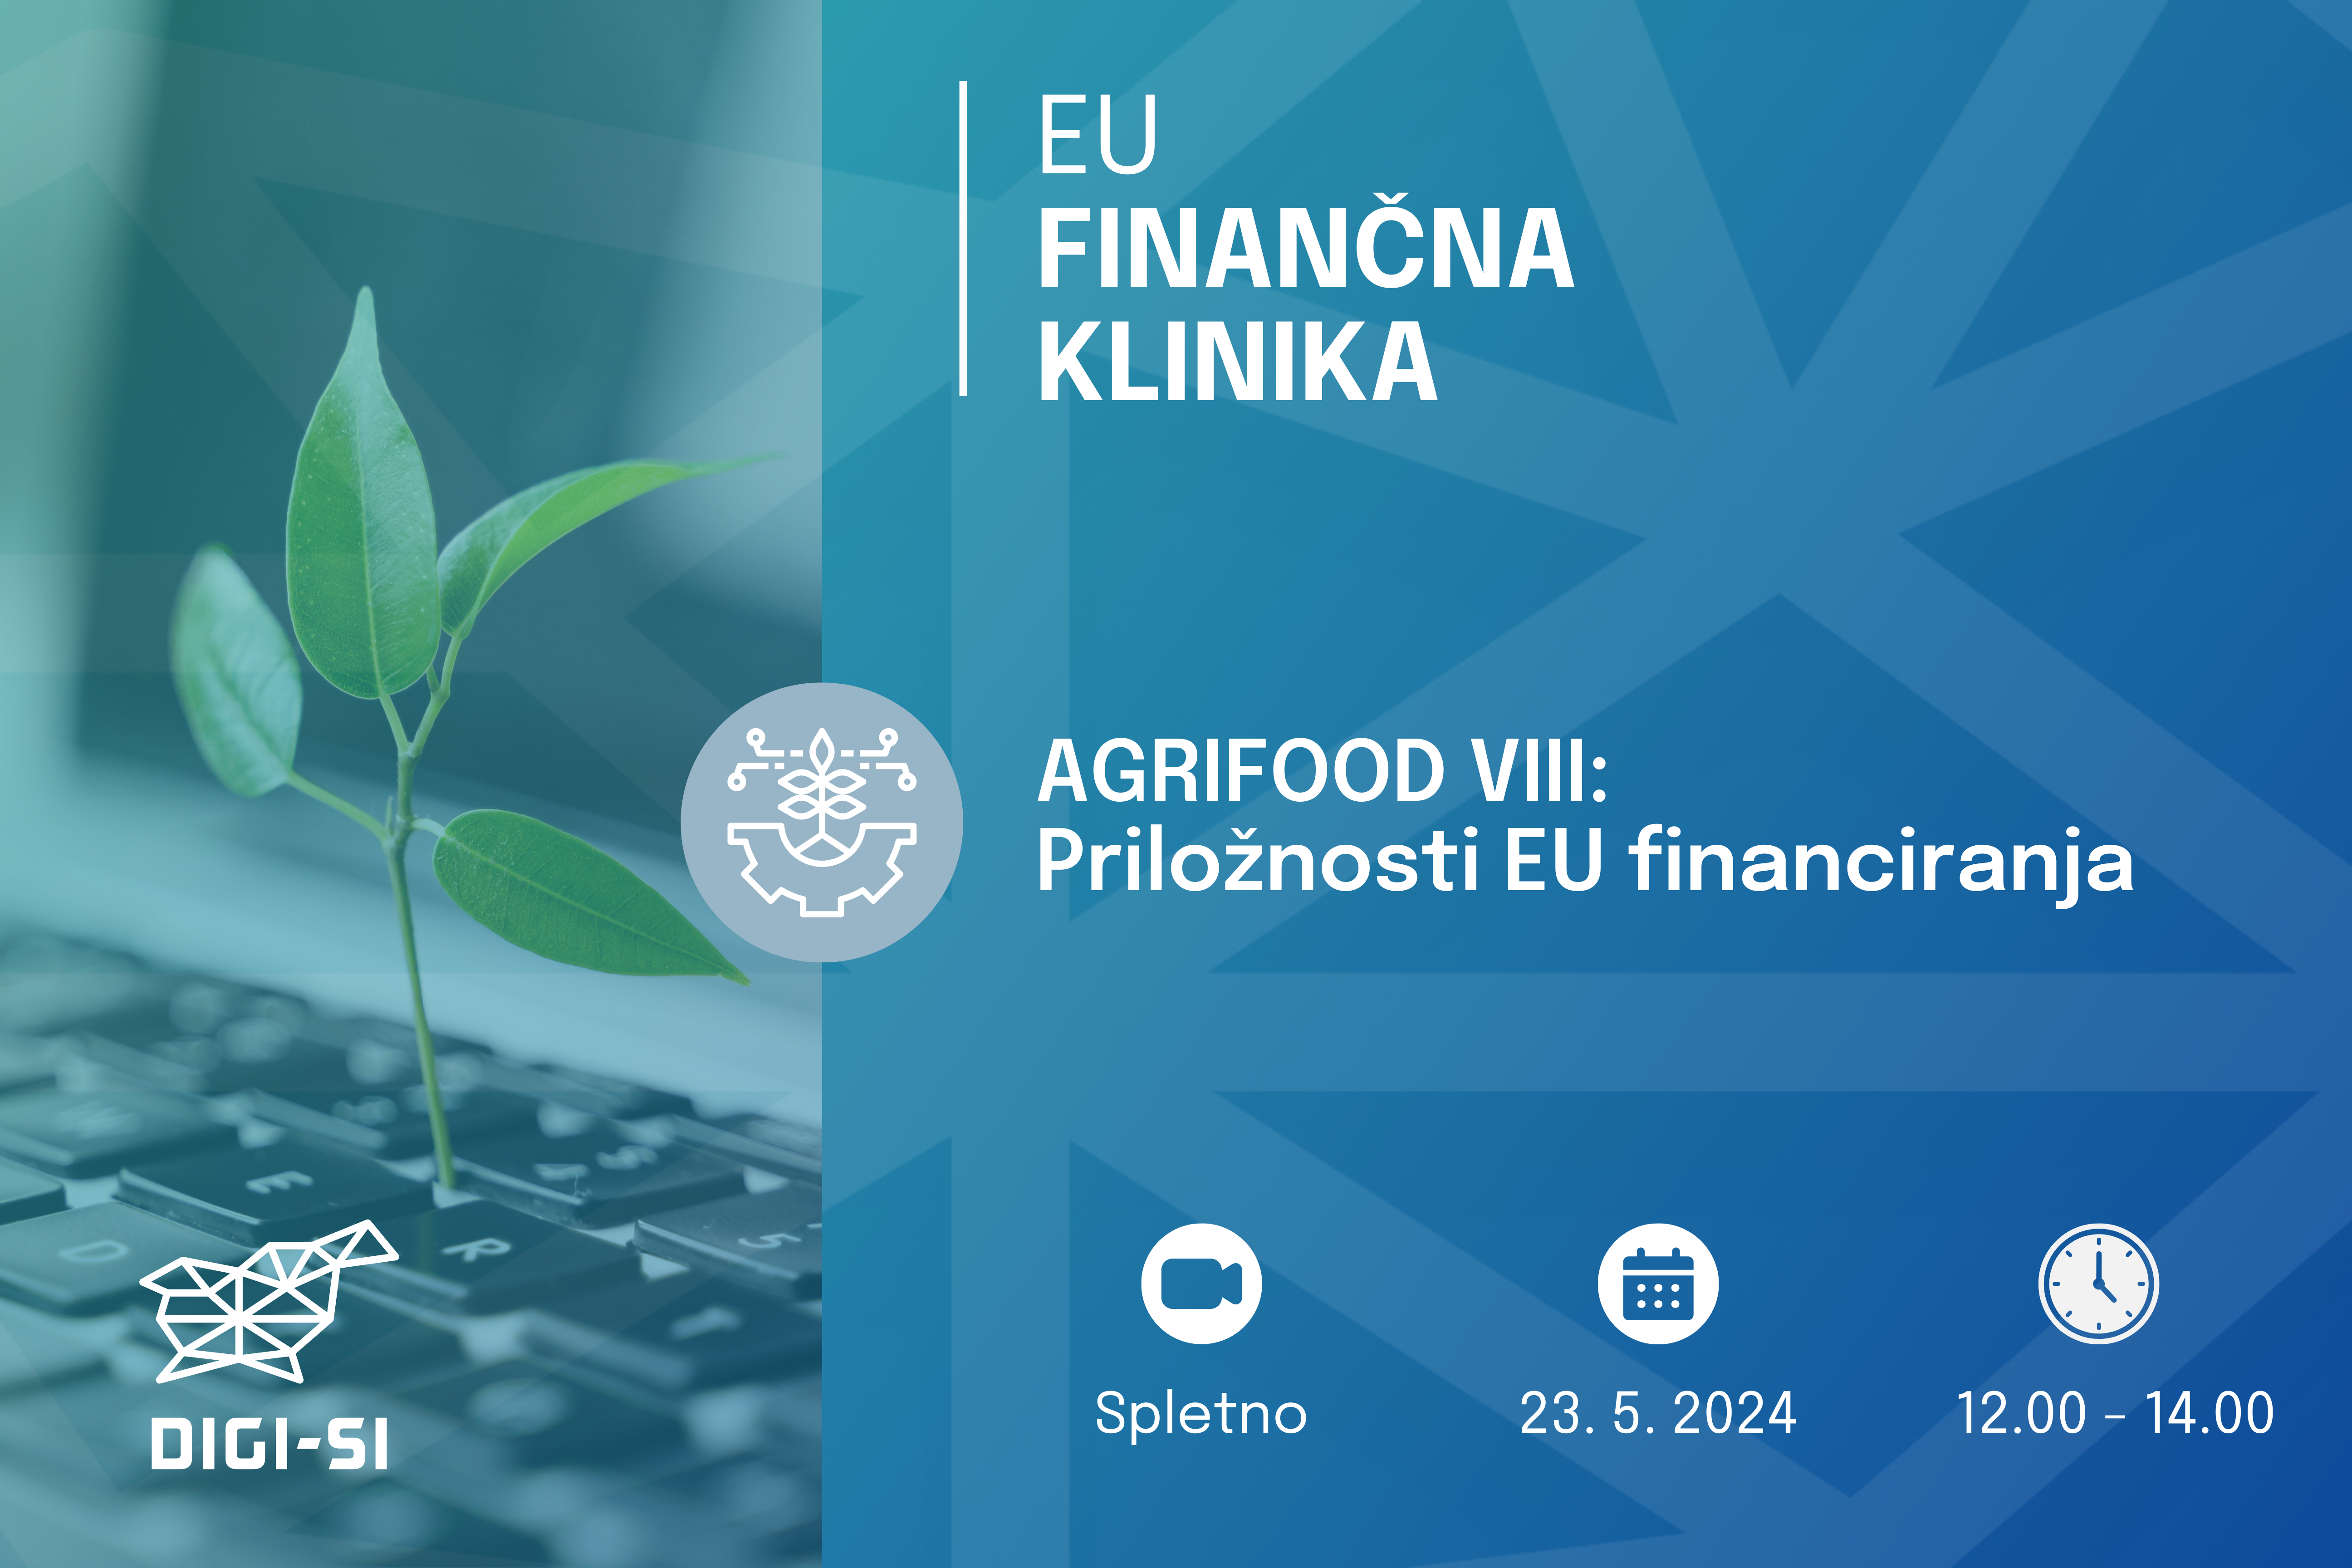 EU funding klinika Agrifood VIII 23 5 2024